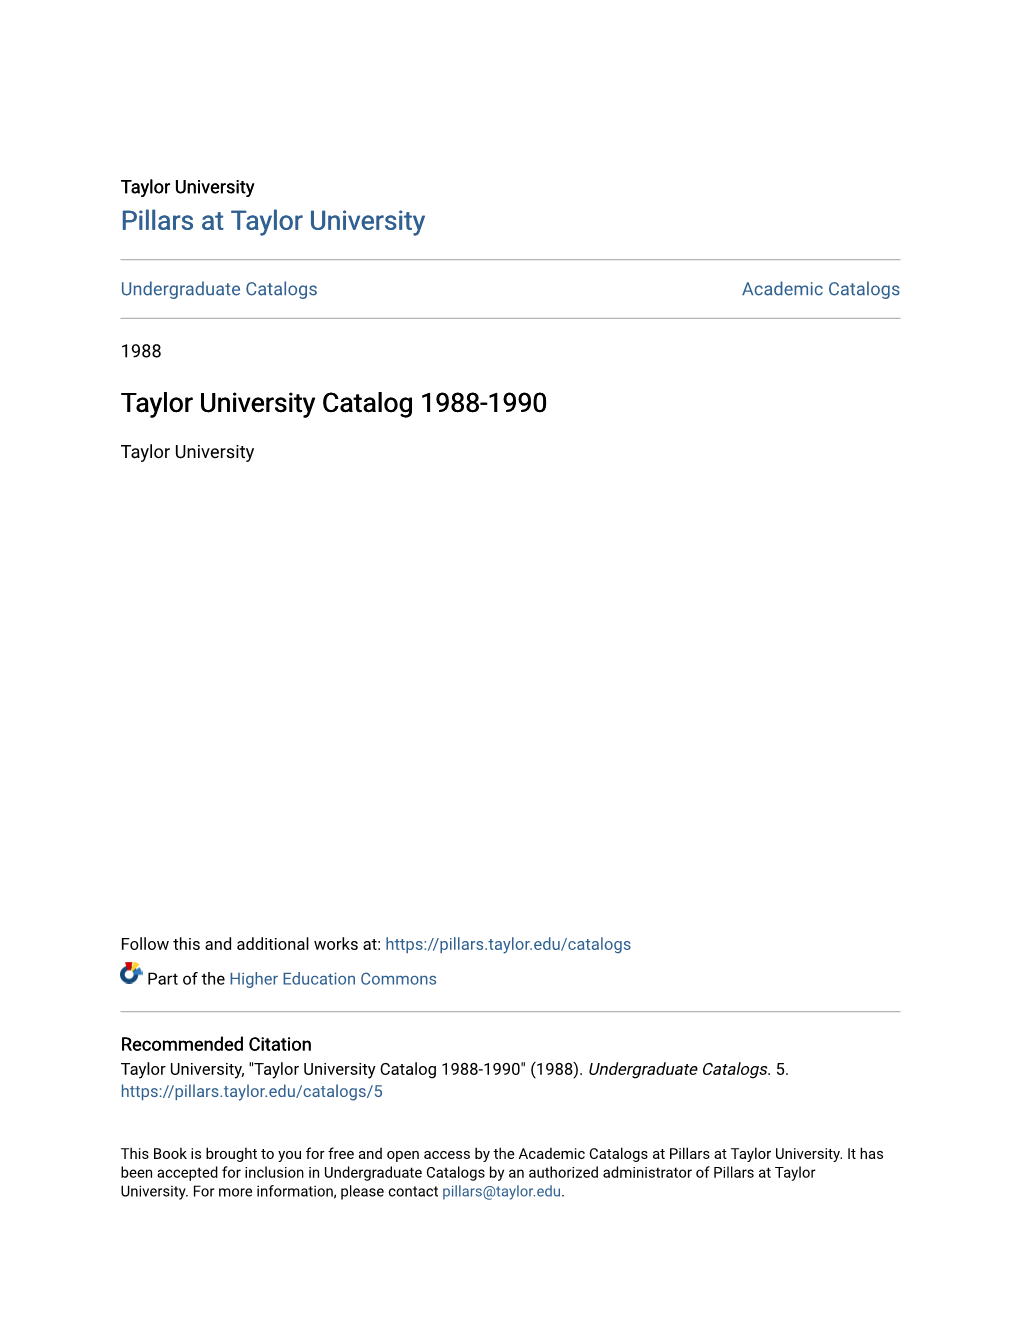 Taylor University Catalog 1988-1990